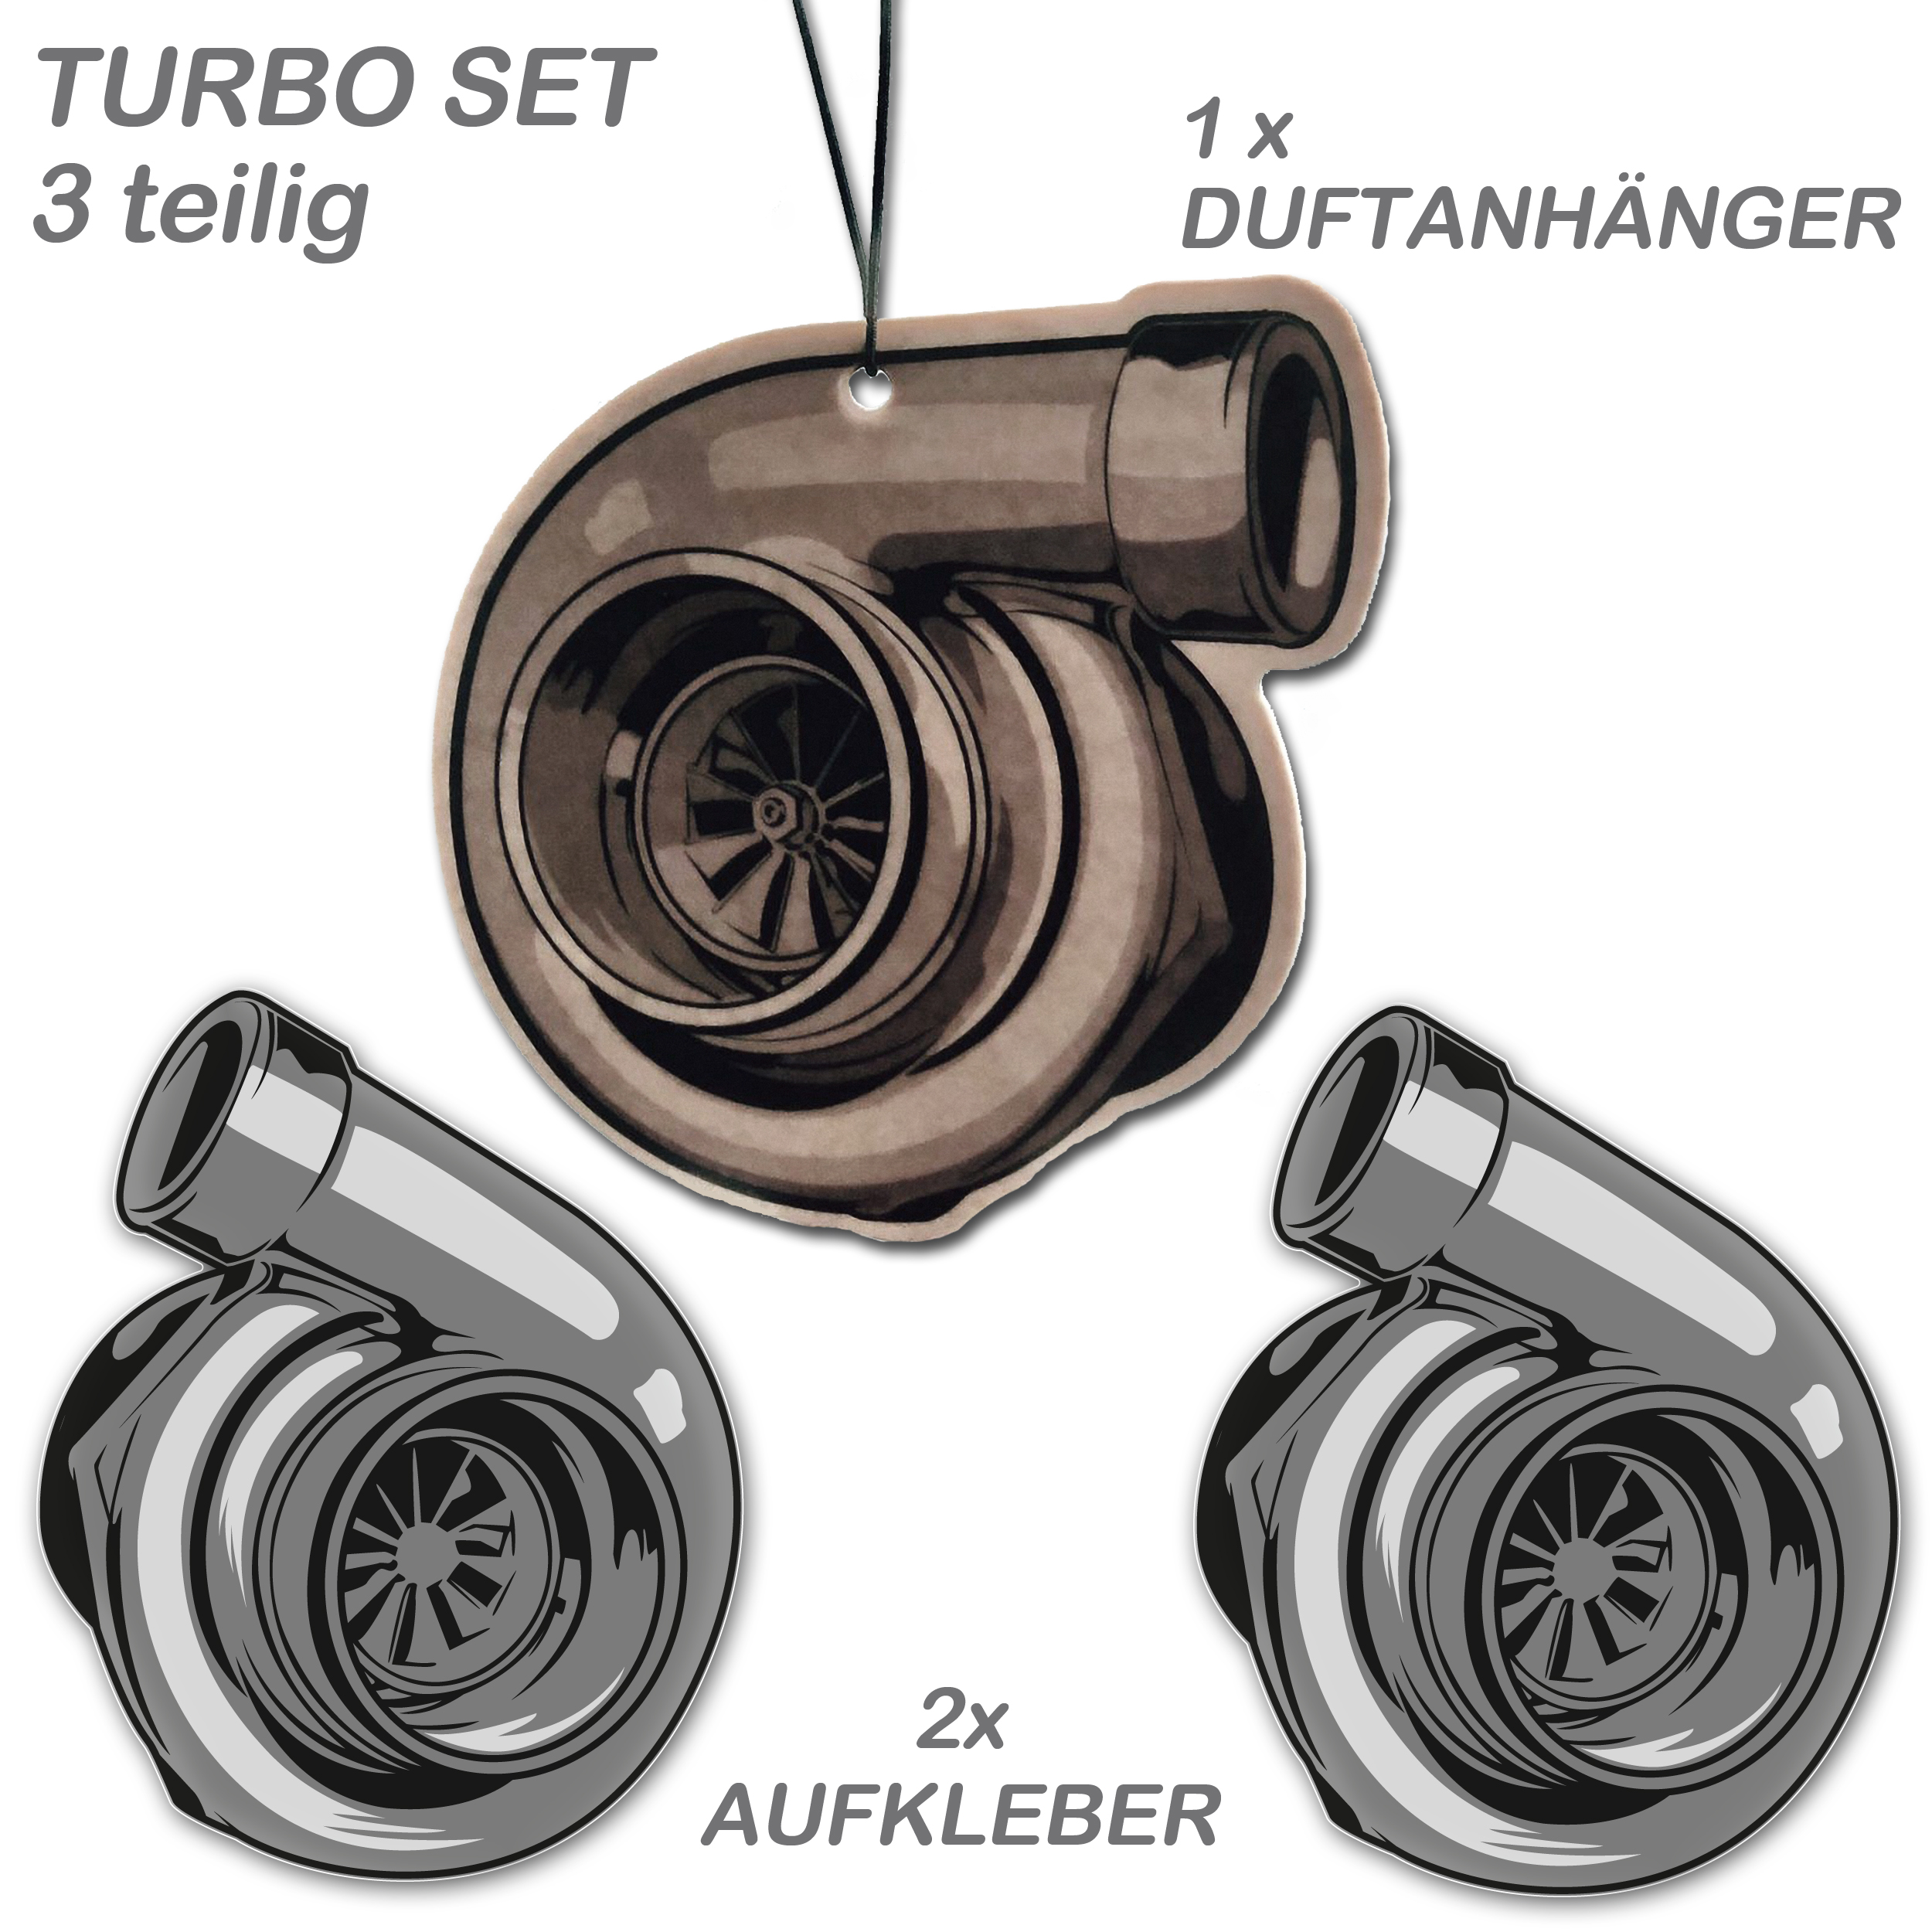 Turbo Duftbaum Aufkleber Set Sticker Duftanhänger Tuning Turbolader 3 Teilig